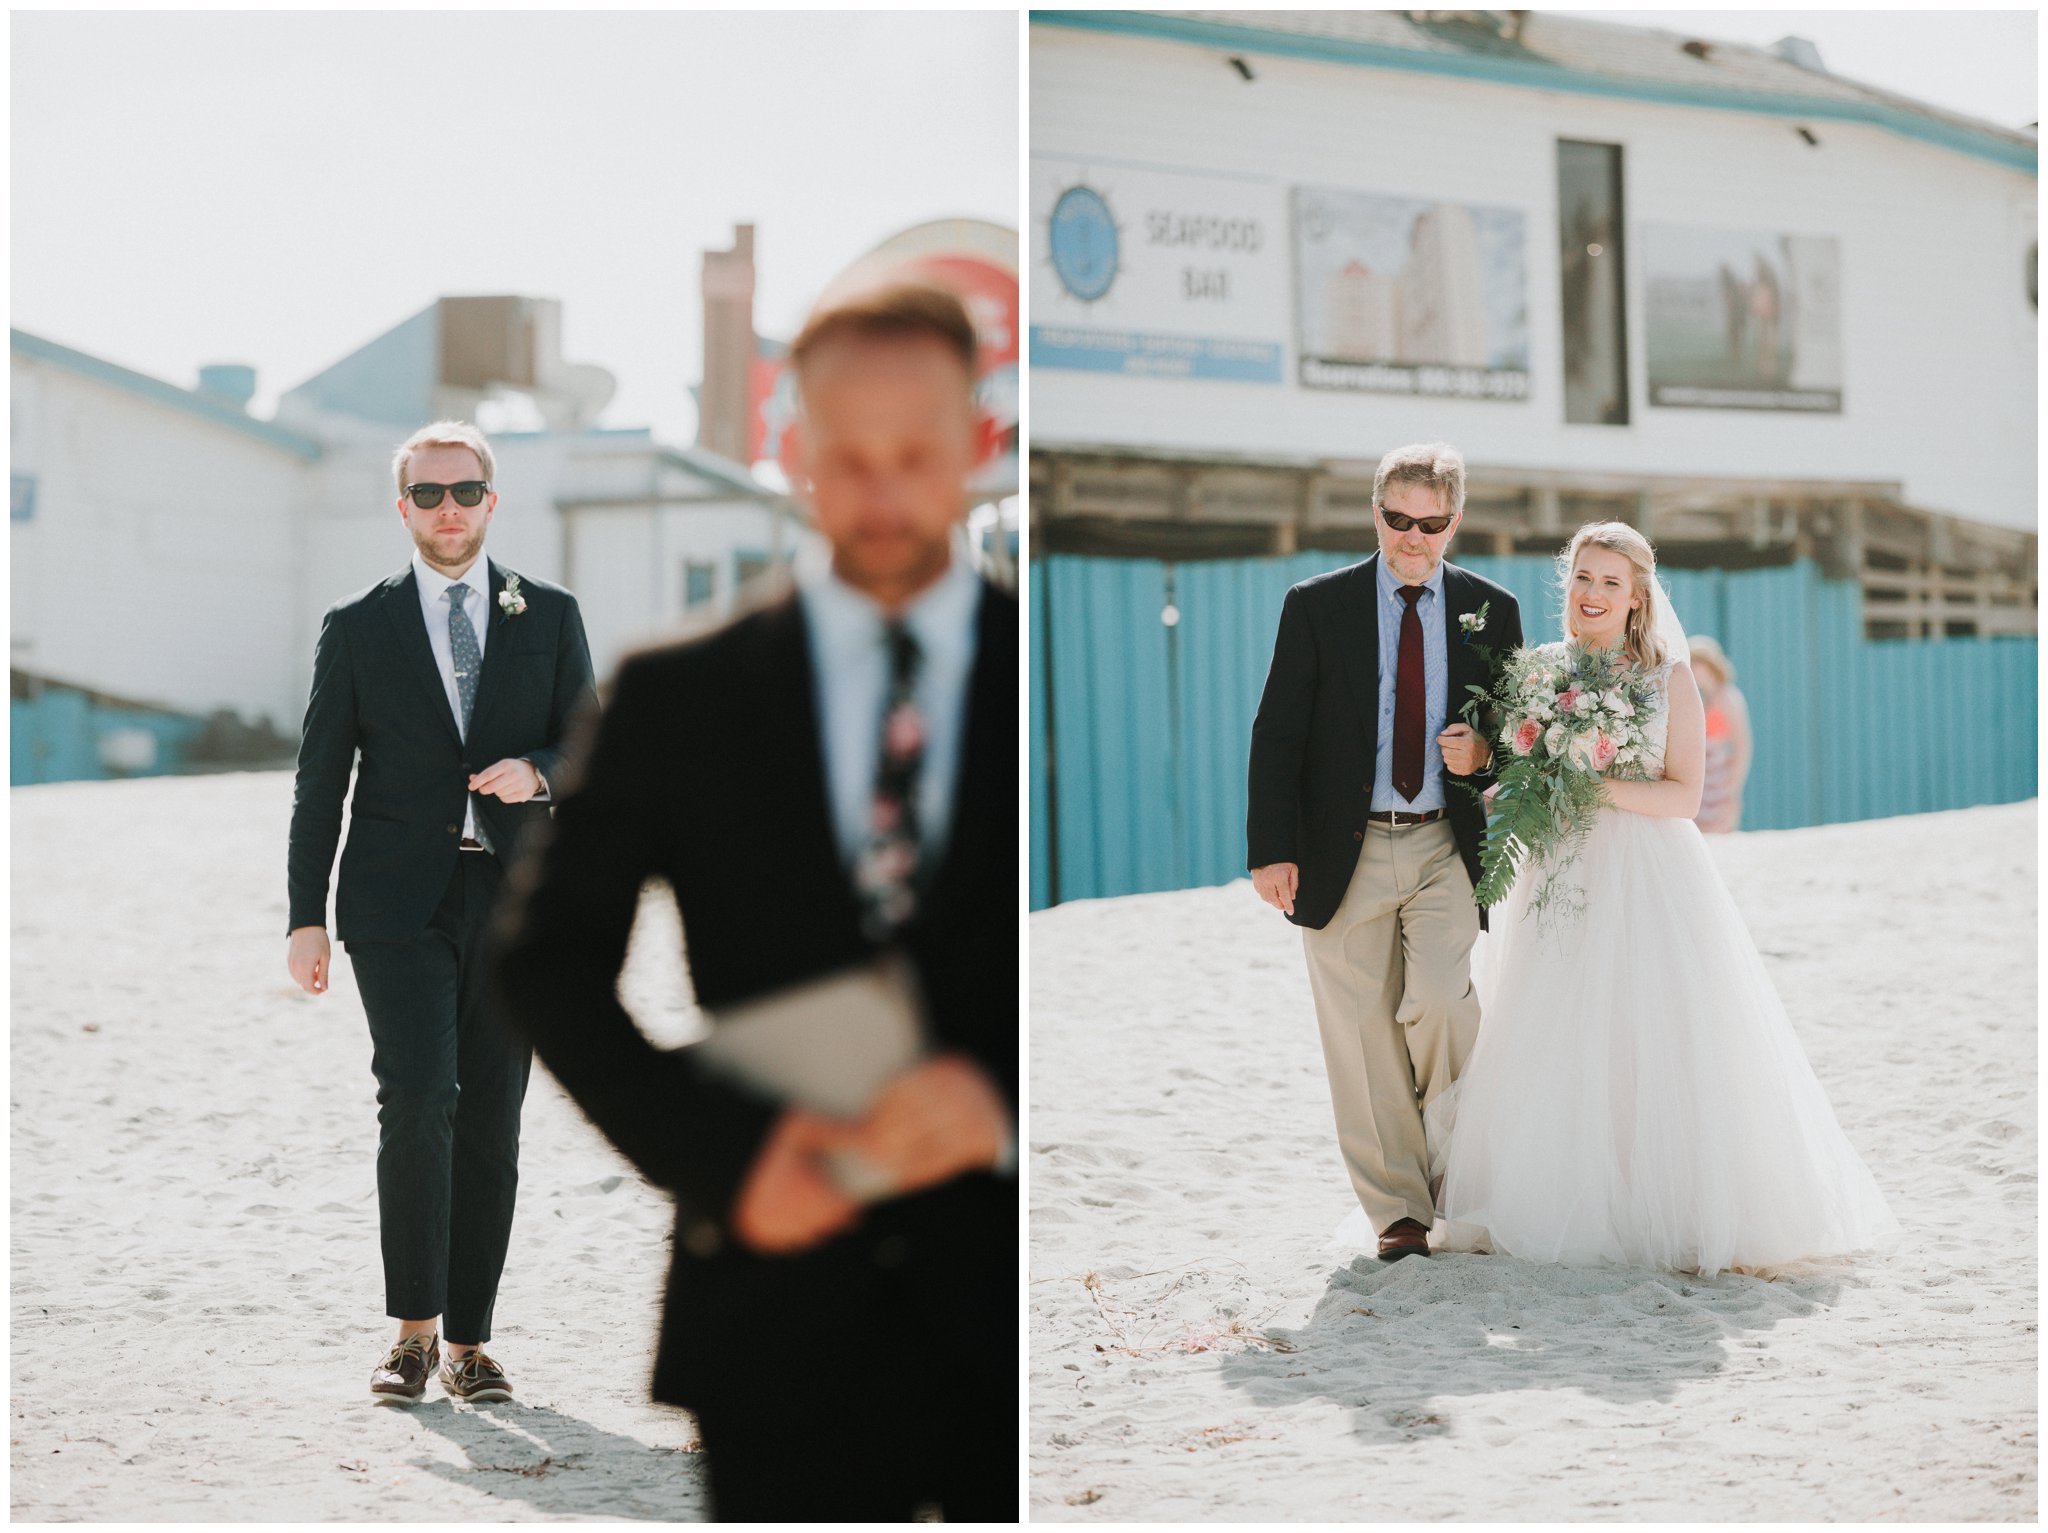 kaley and kevin-coco beach pier wedding-kimberly smith photography_0026.jpg